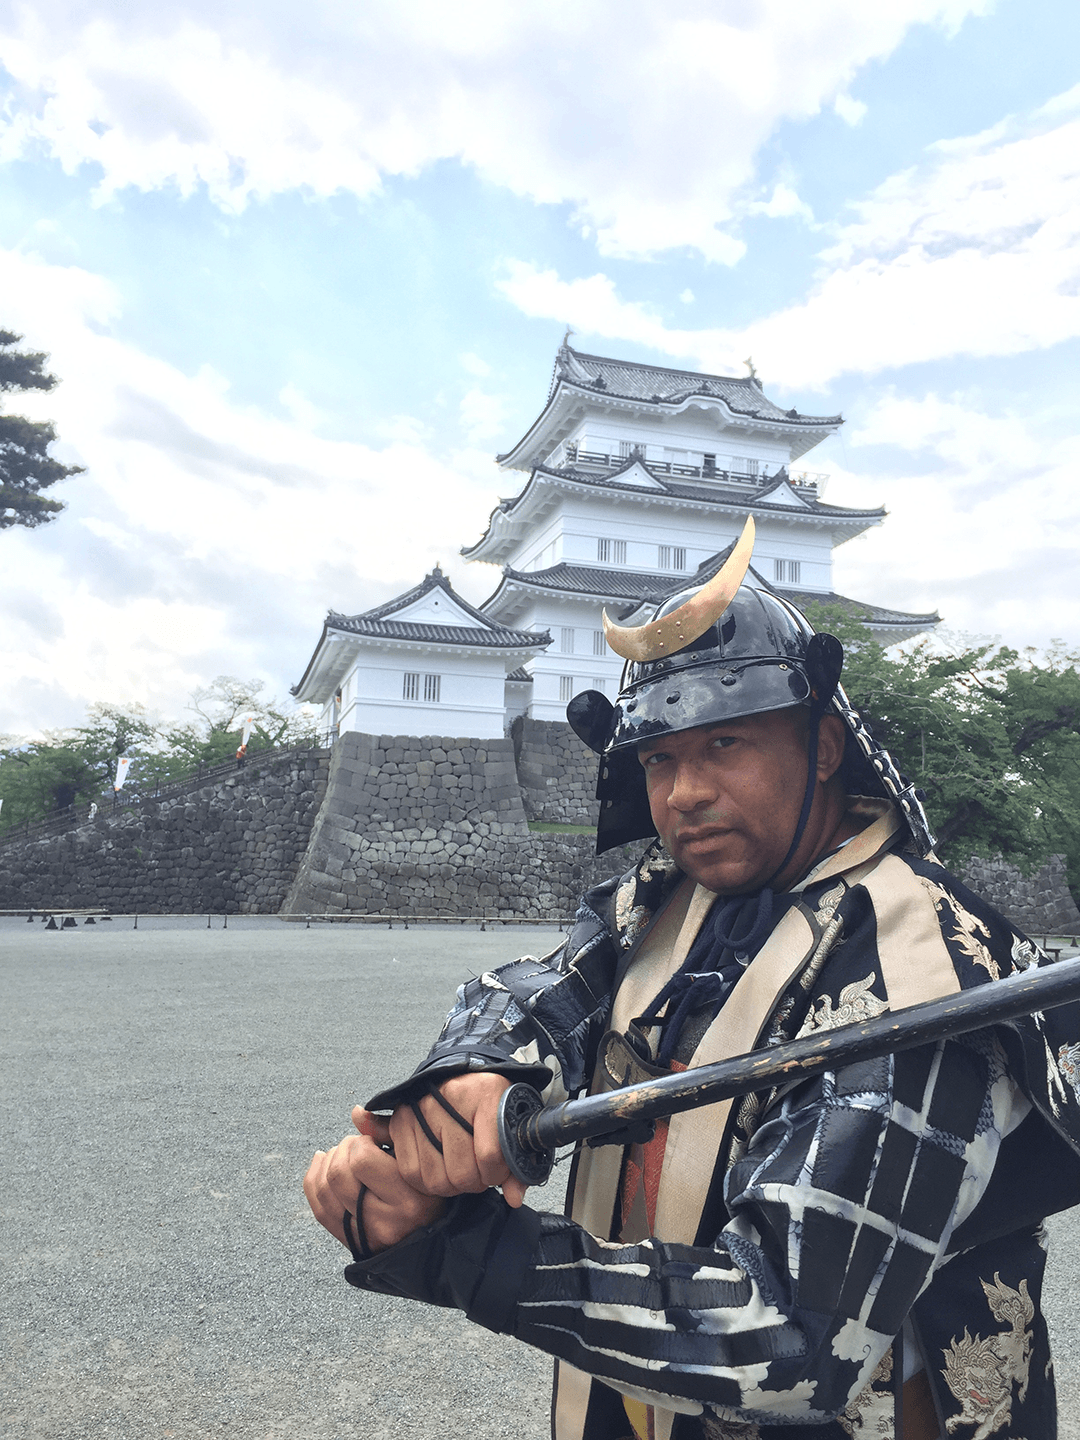 Show Notes Gear and Links - Odawara Castle Japan Guide Review Video - 9 Reasons To See Odawara Castle Kanagawa Japan 🇯🇵 🏯 🌸